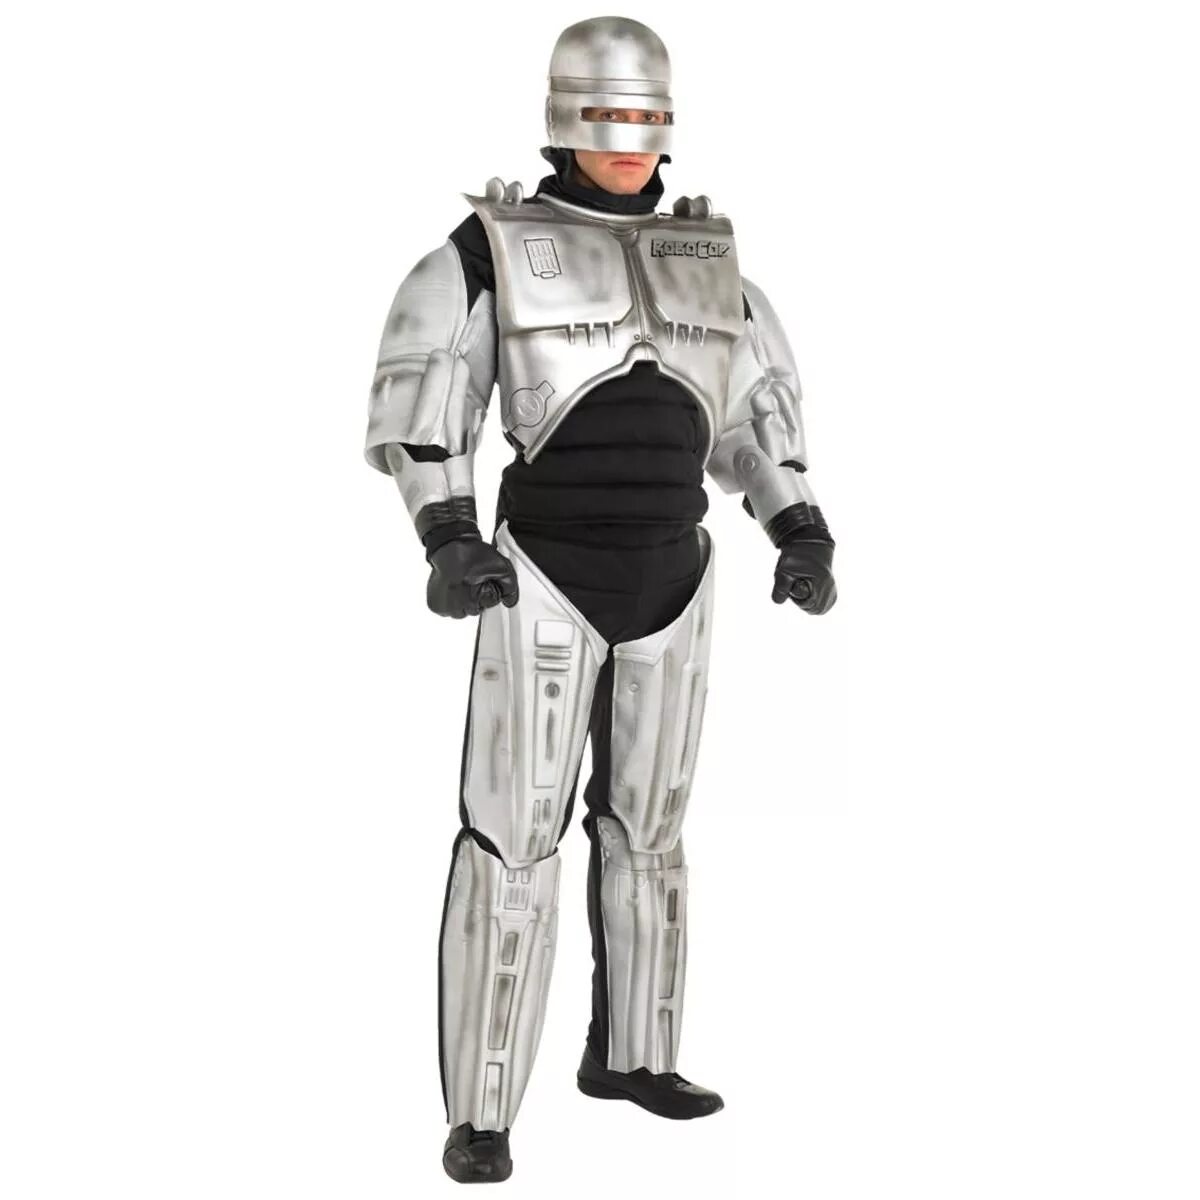 Mask suit. Робокоп костюм. Робокоп 2014 костюм. Детский костюм робокопа. Взрослый костюм "робот".